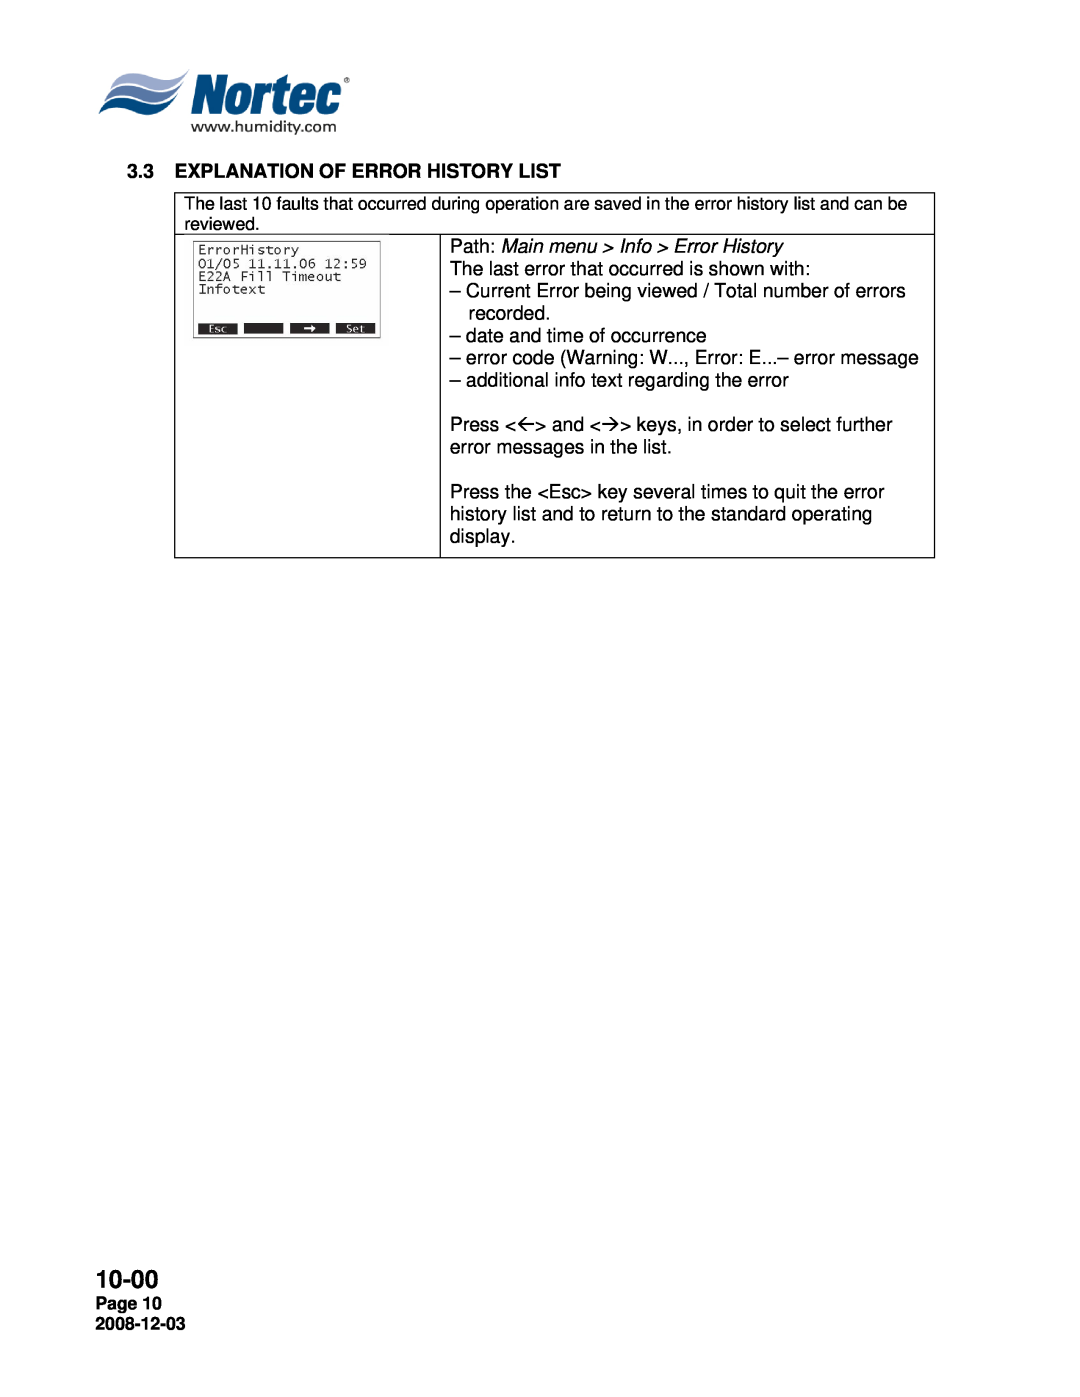 Nortec MH Series installation manual 3.3EXPLANATION OF ERROR HISTORY LIST, Path Main menu Info Error History, 10-00 